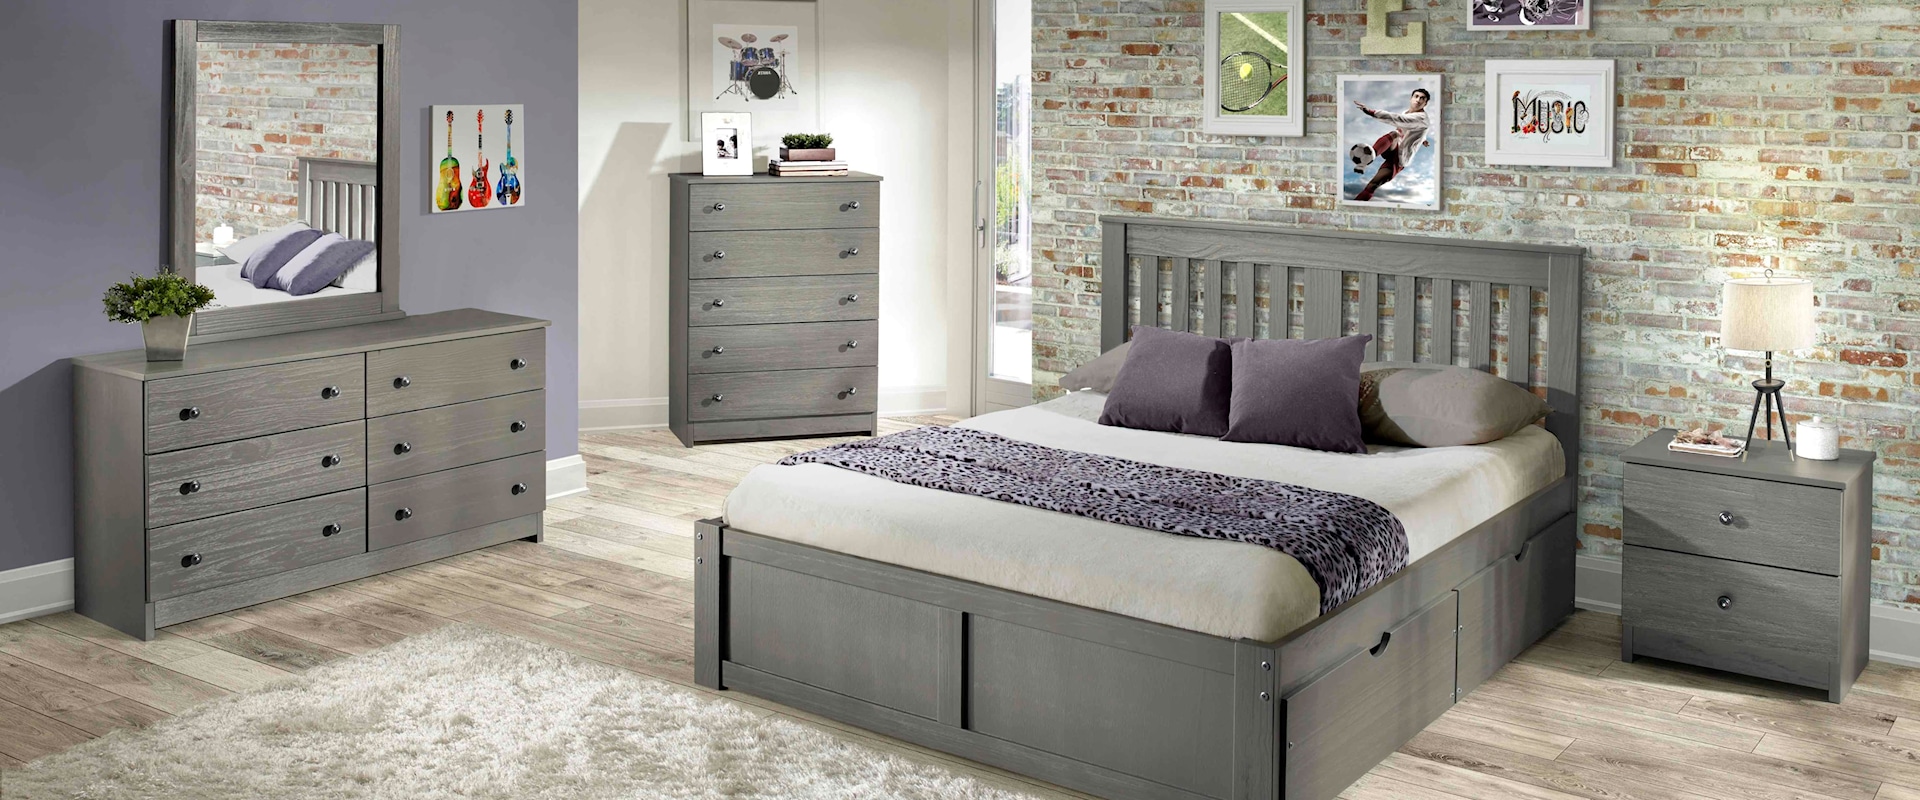 York 5-Piece Full Bedroom Set - Gray